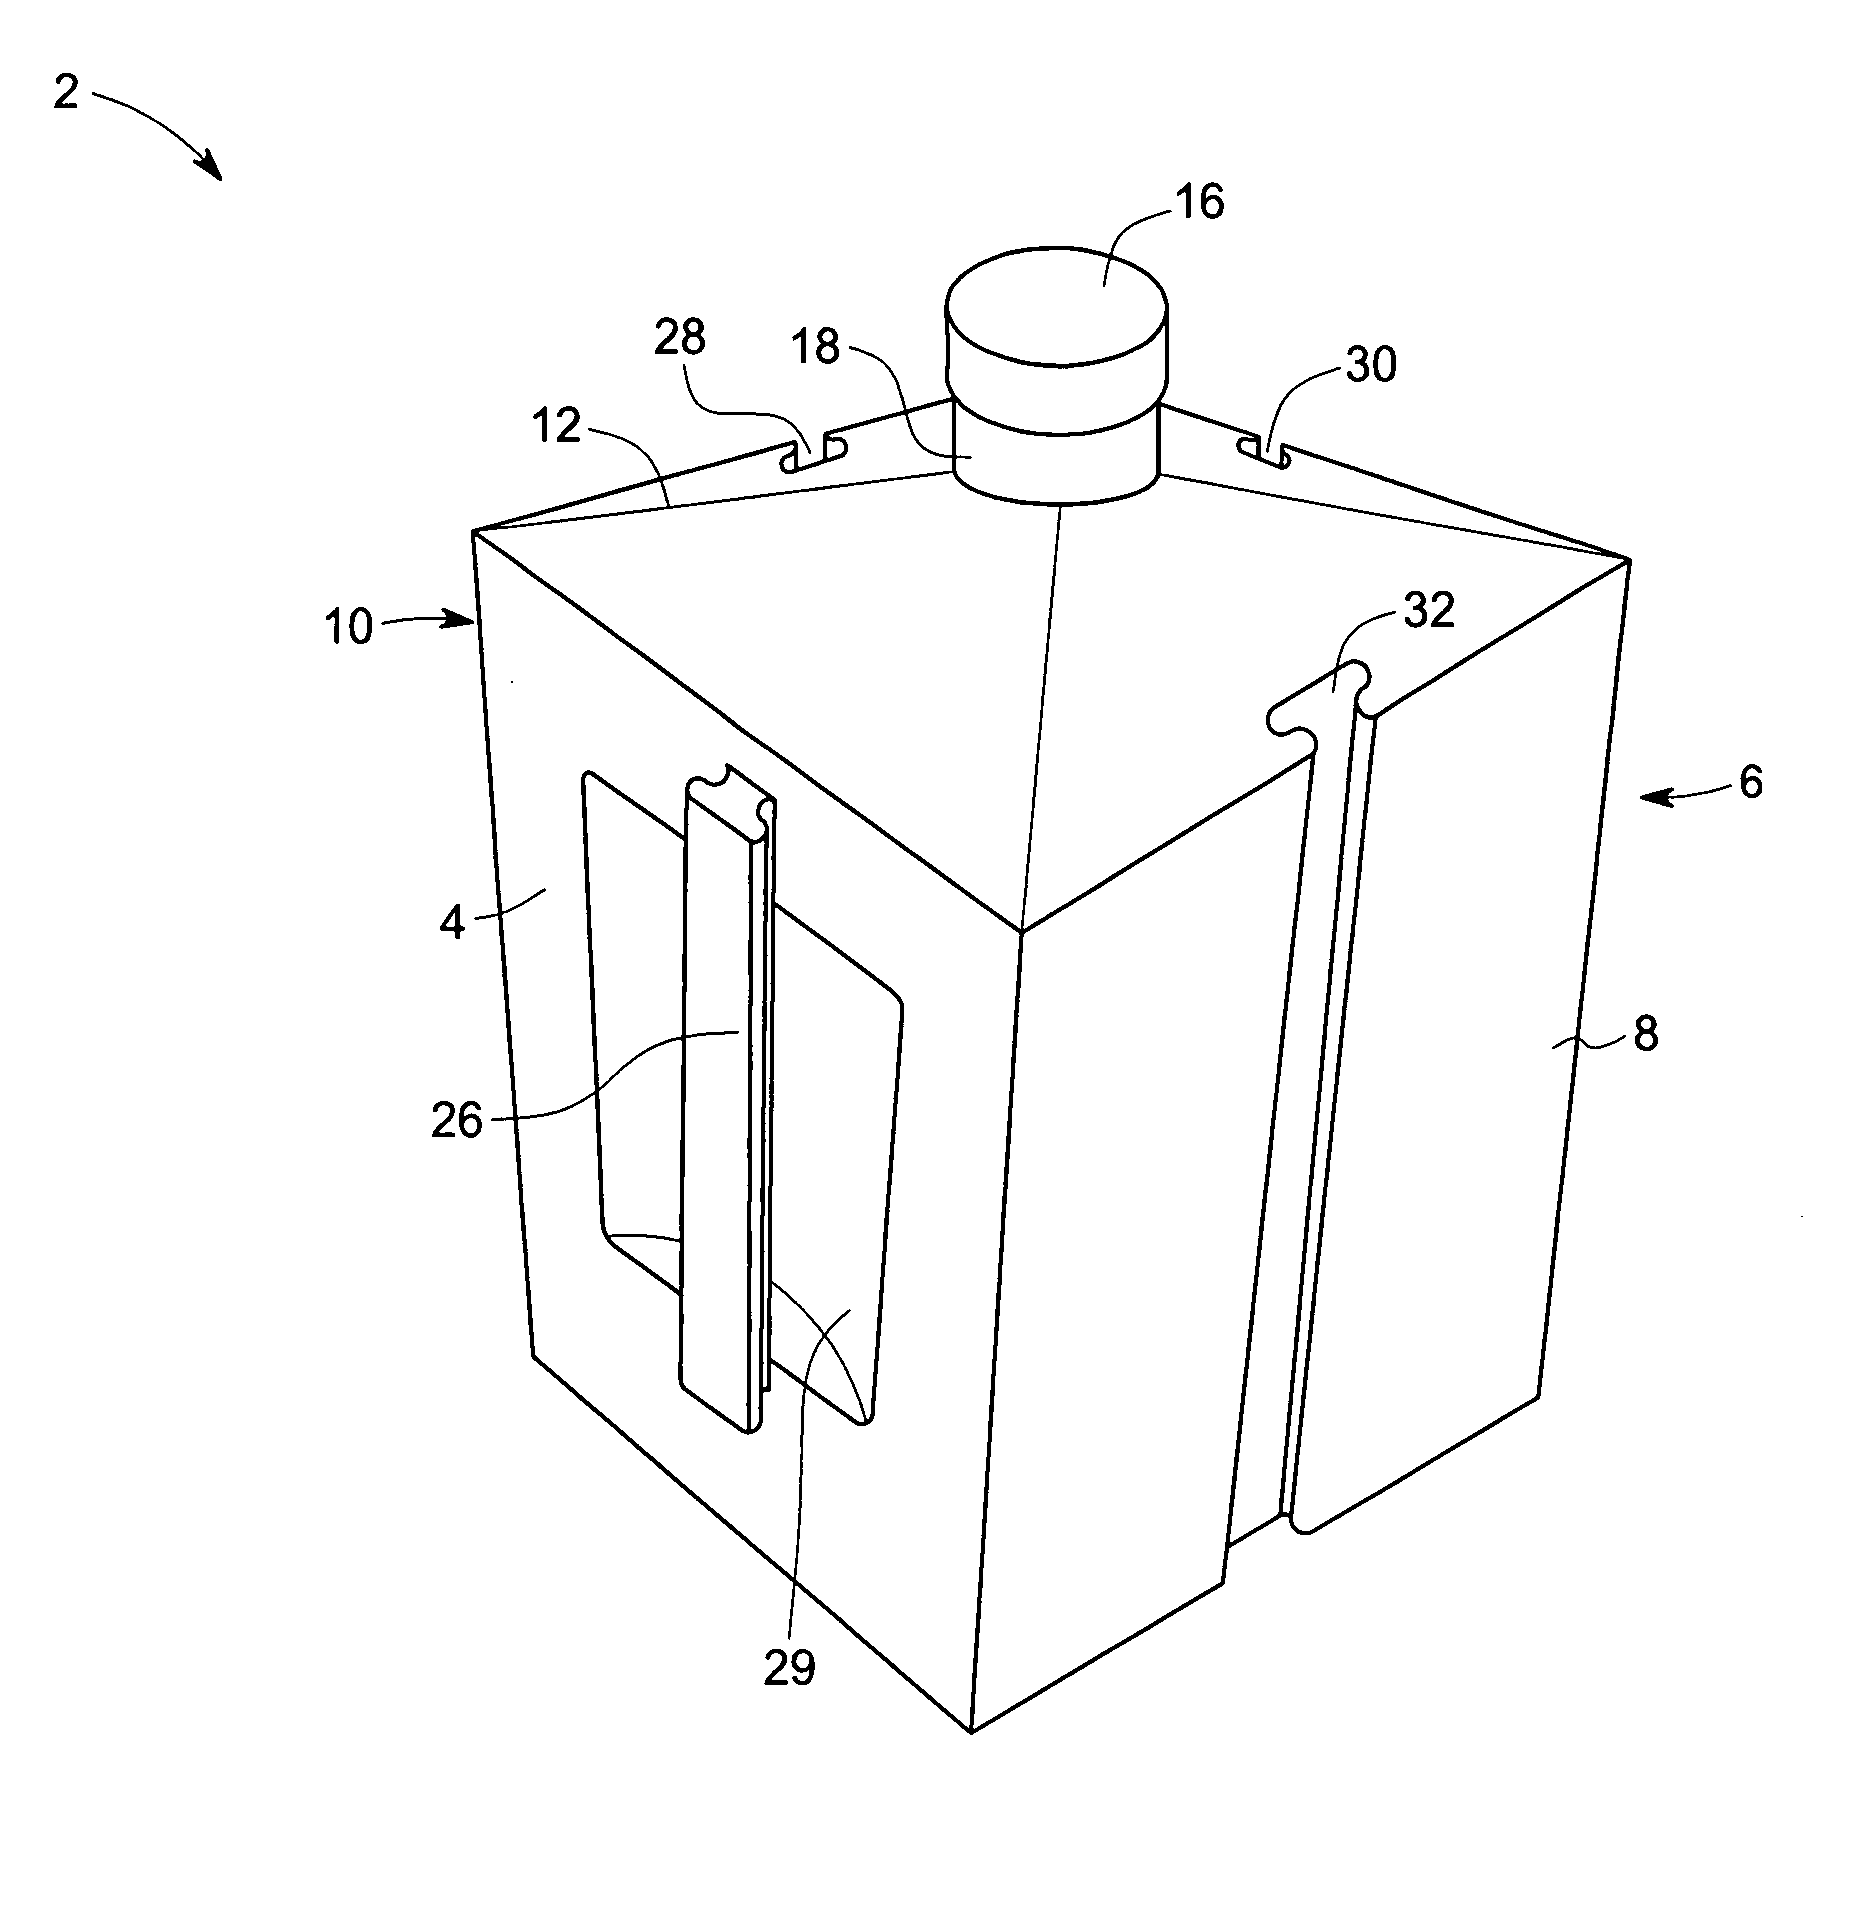 Modular interlocking containers